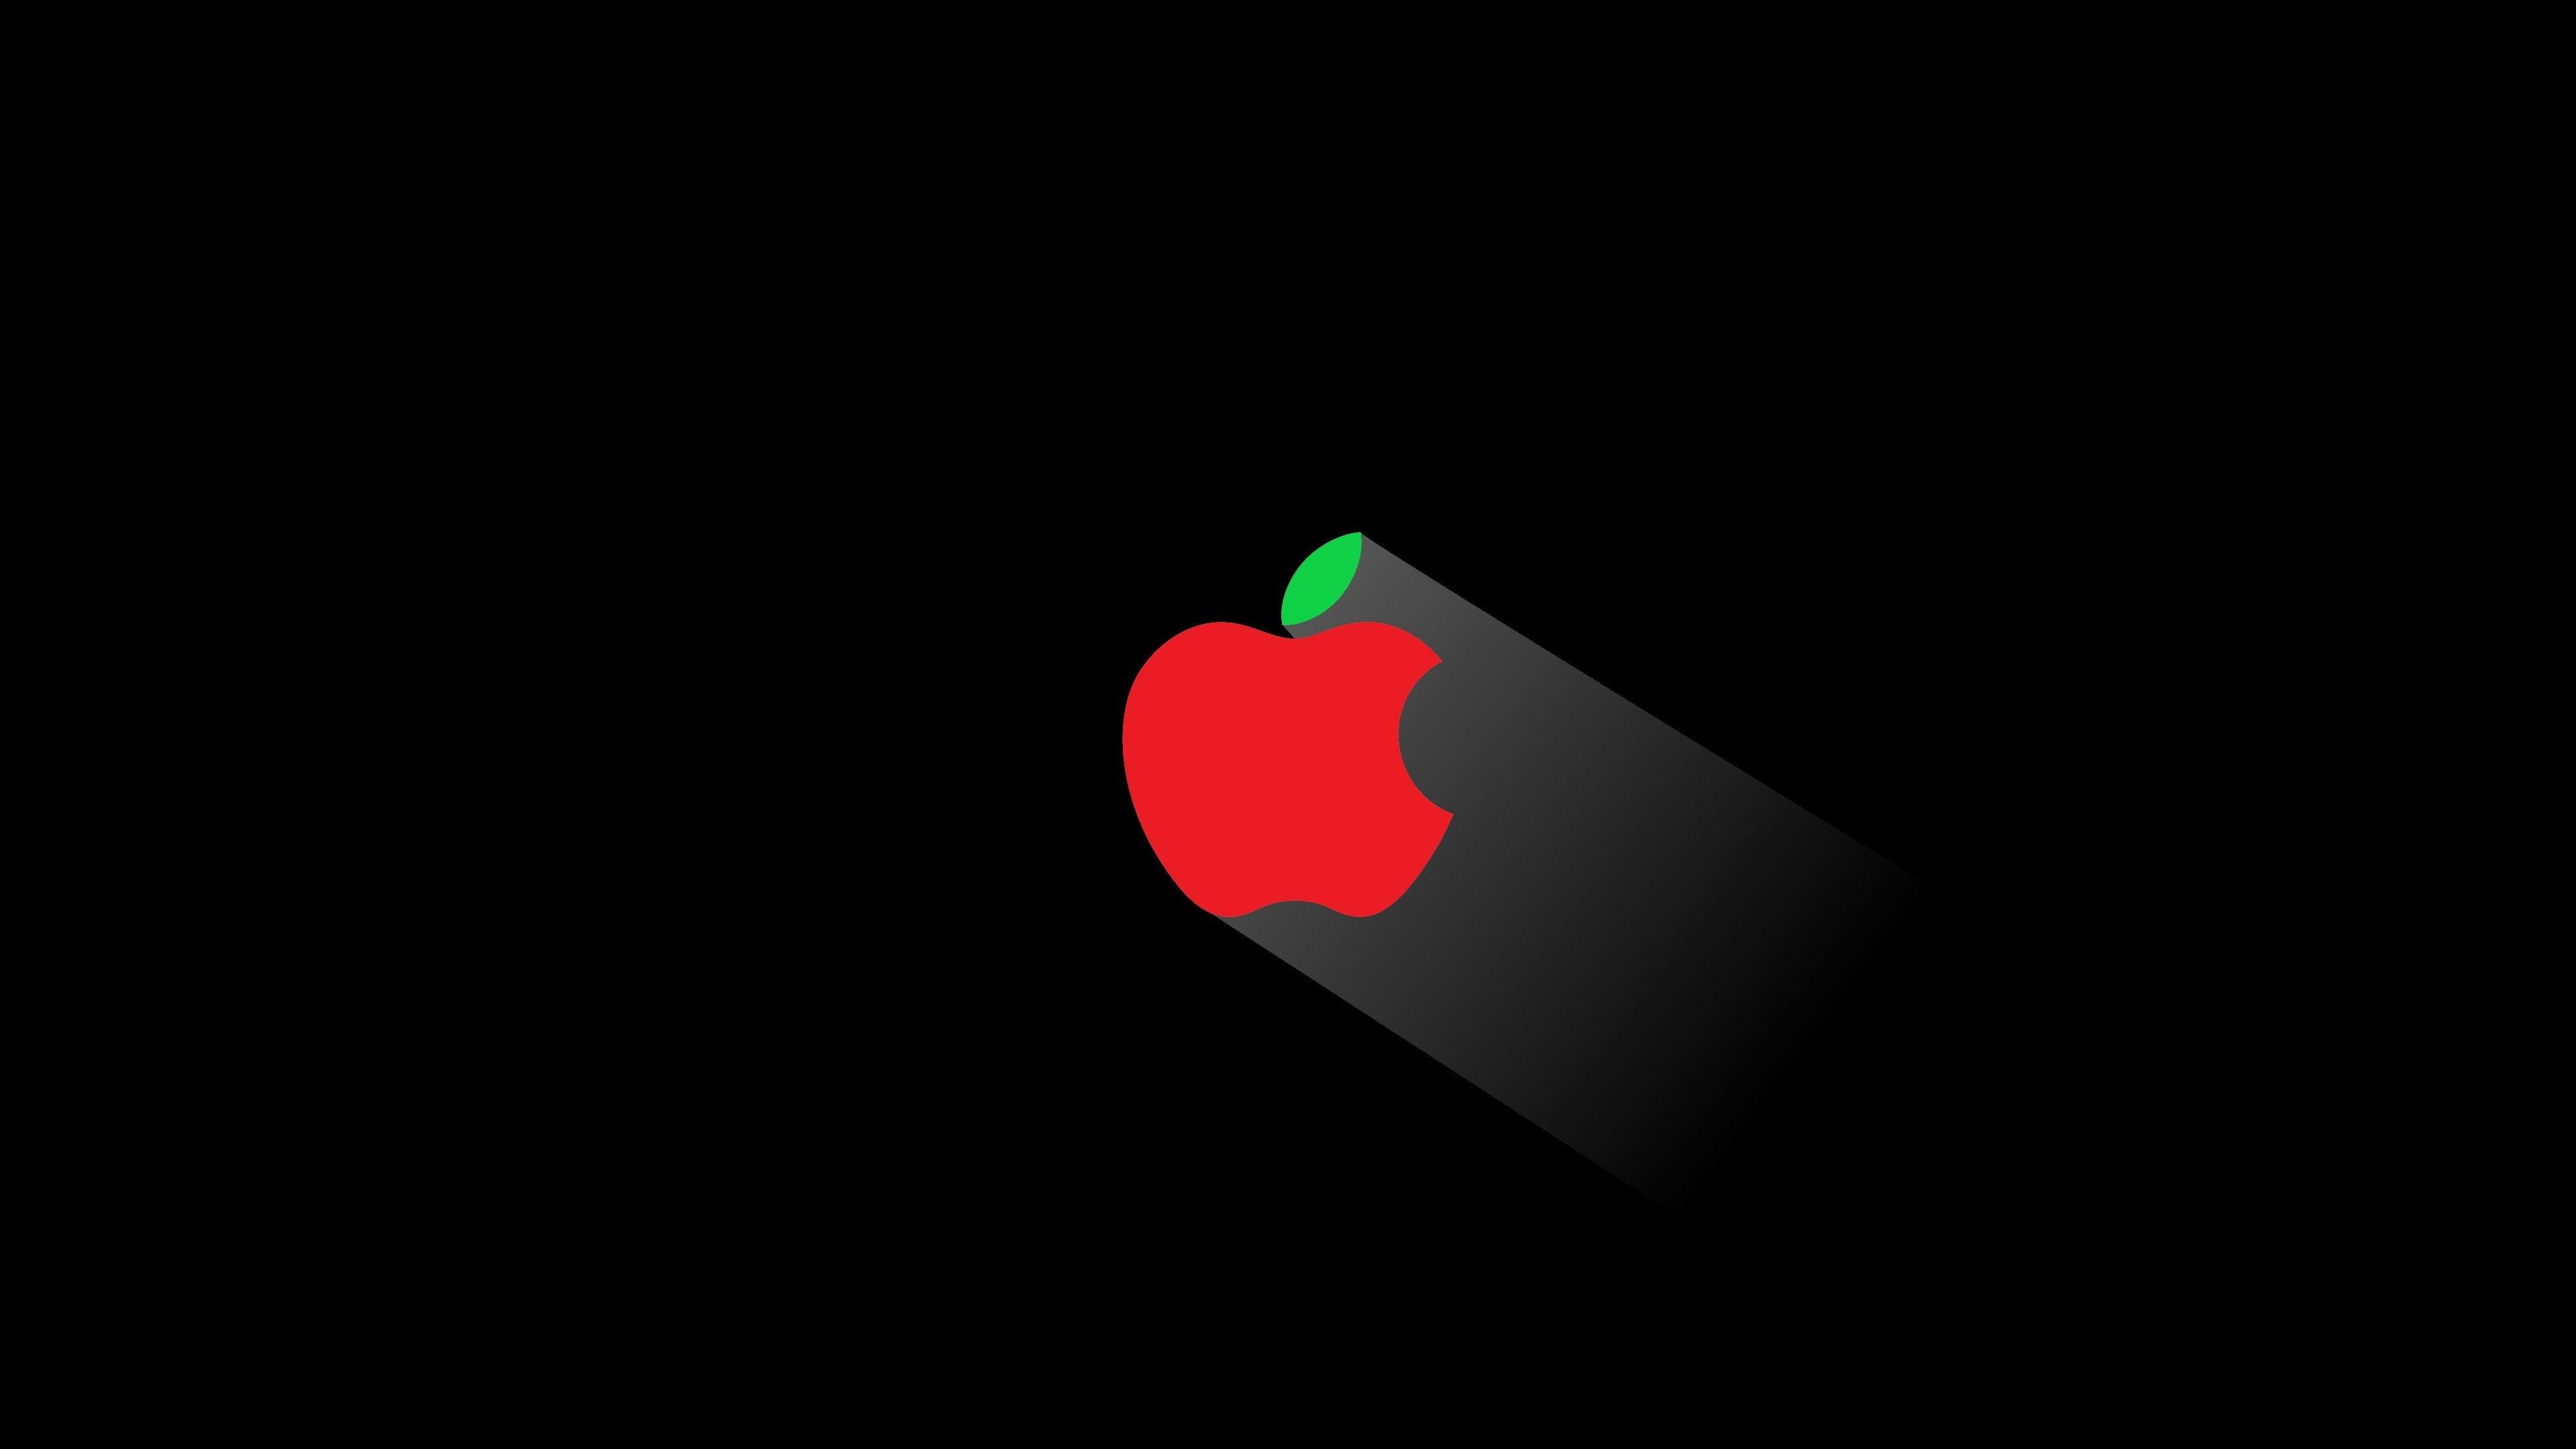 apple 4K wallpaper for your desktop or mobile screen free